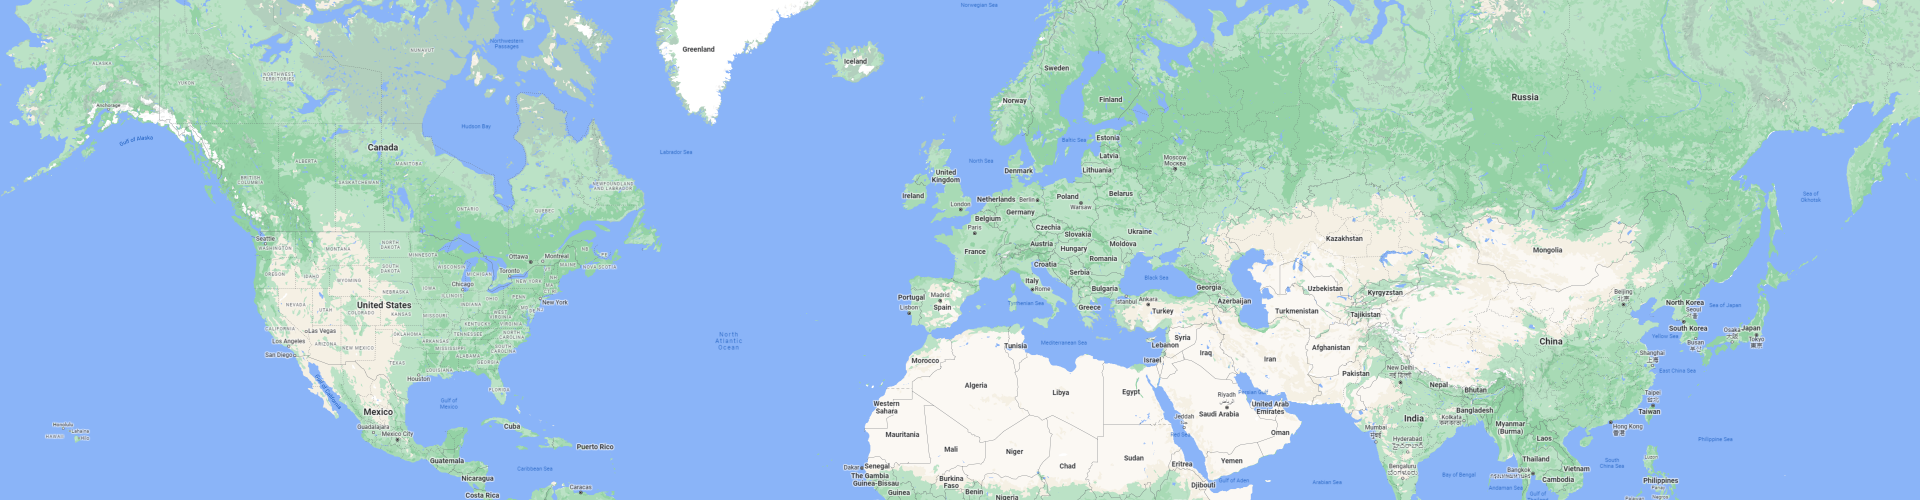 Google Maps World map